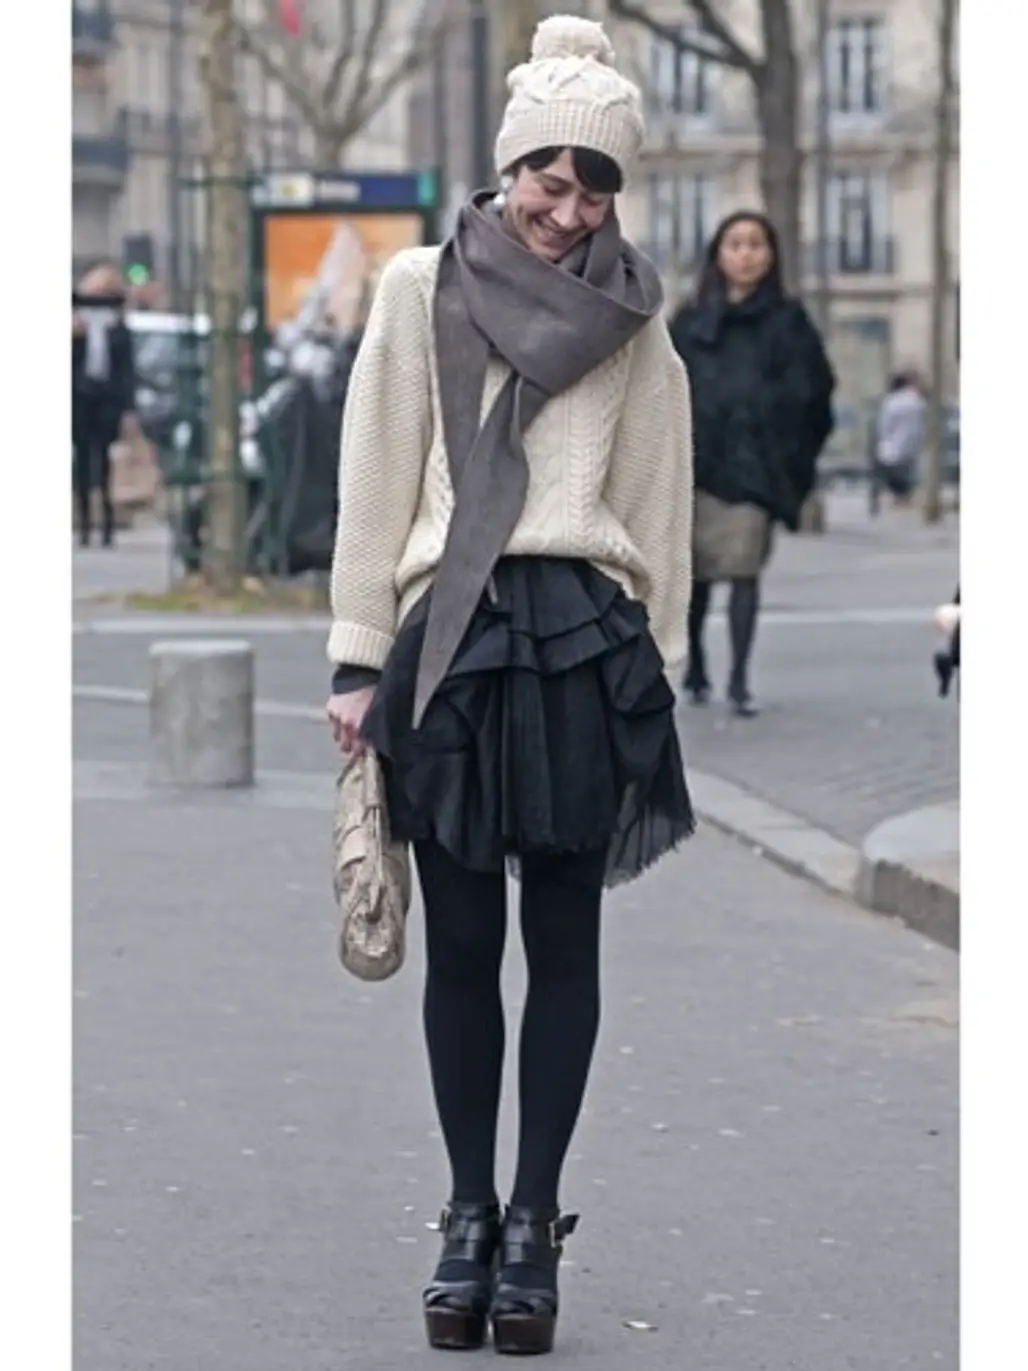 Paris Street Fashion